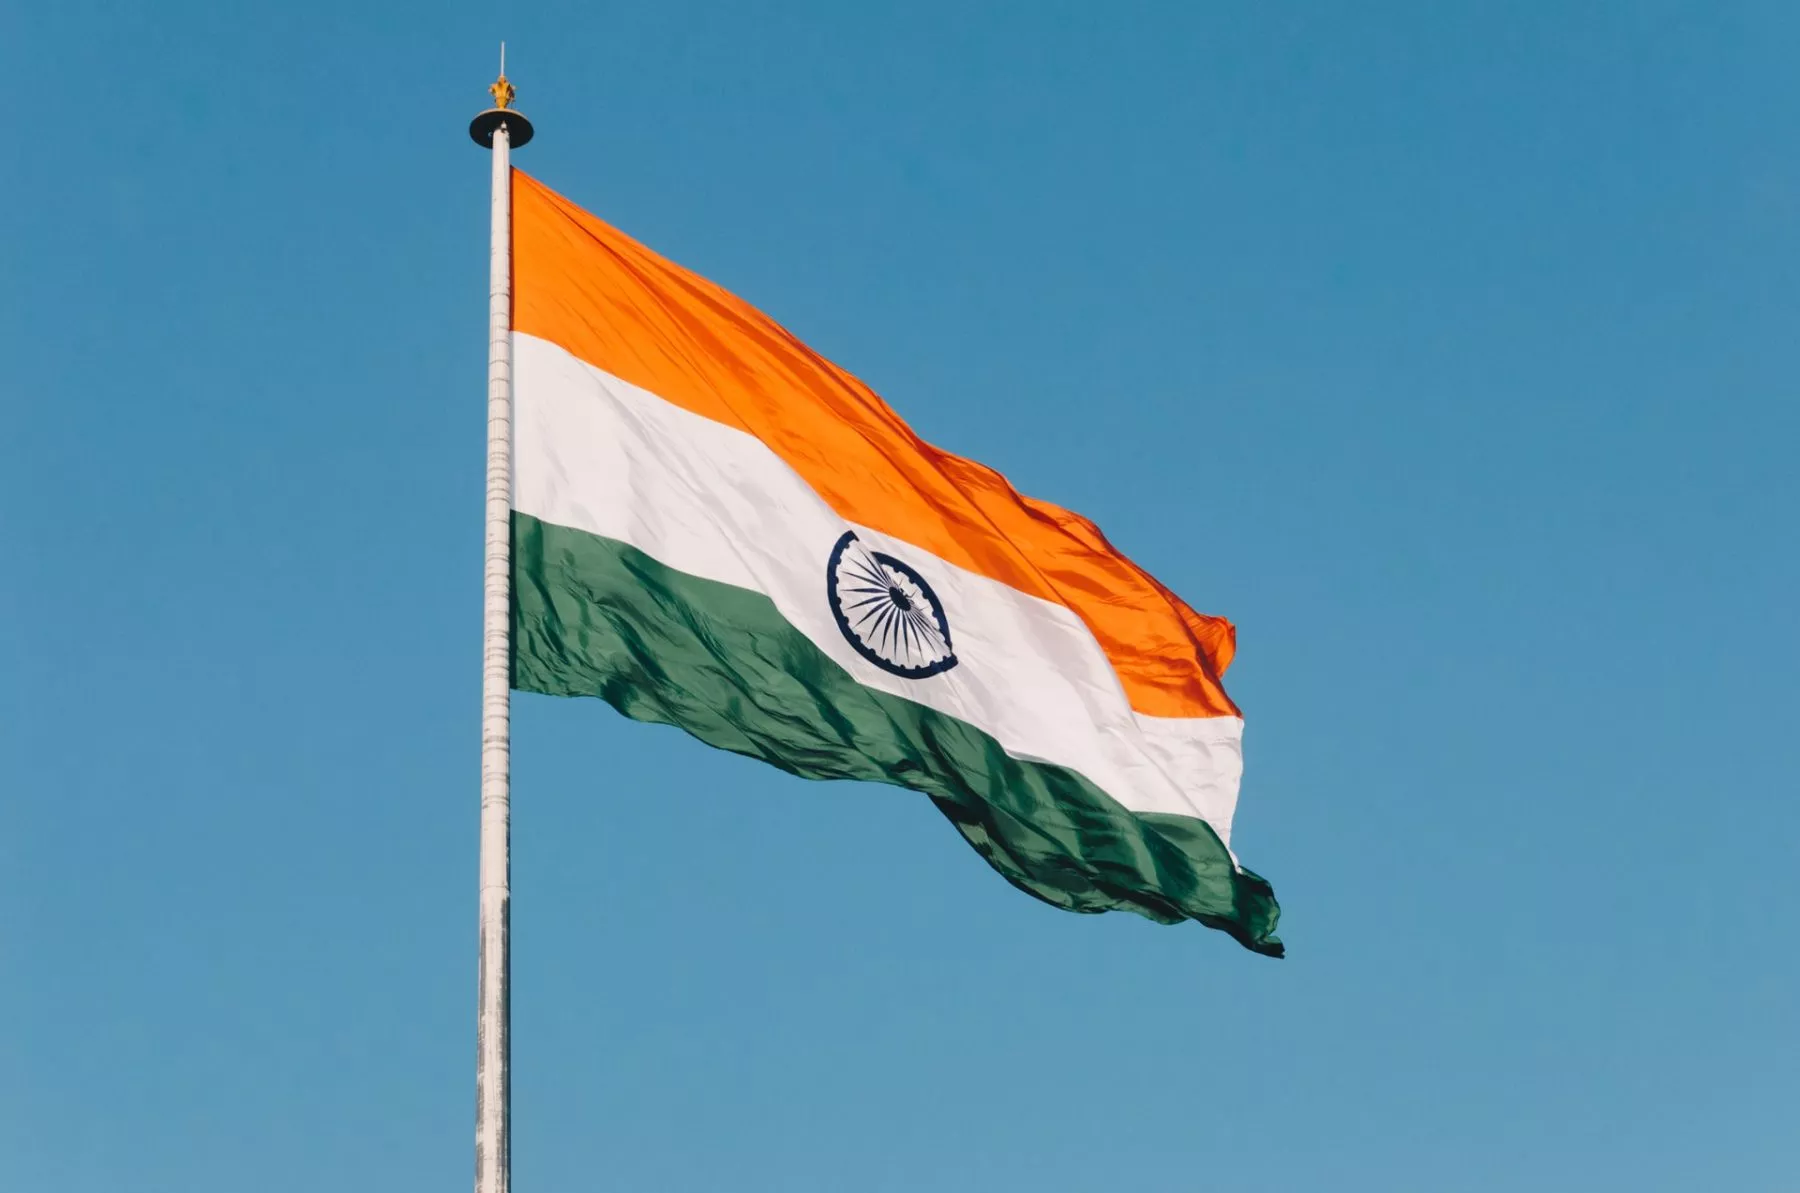 Regering in India heroverweegt het crypto verbod